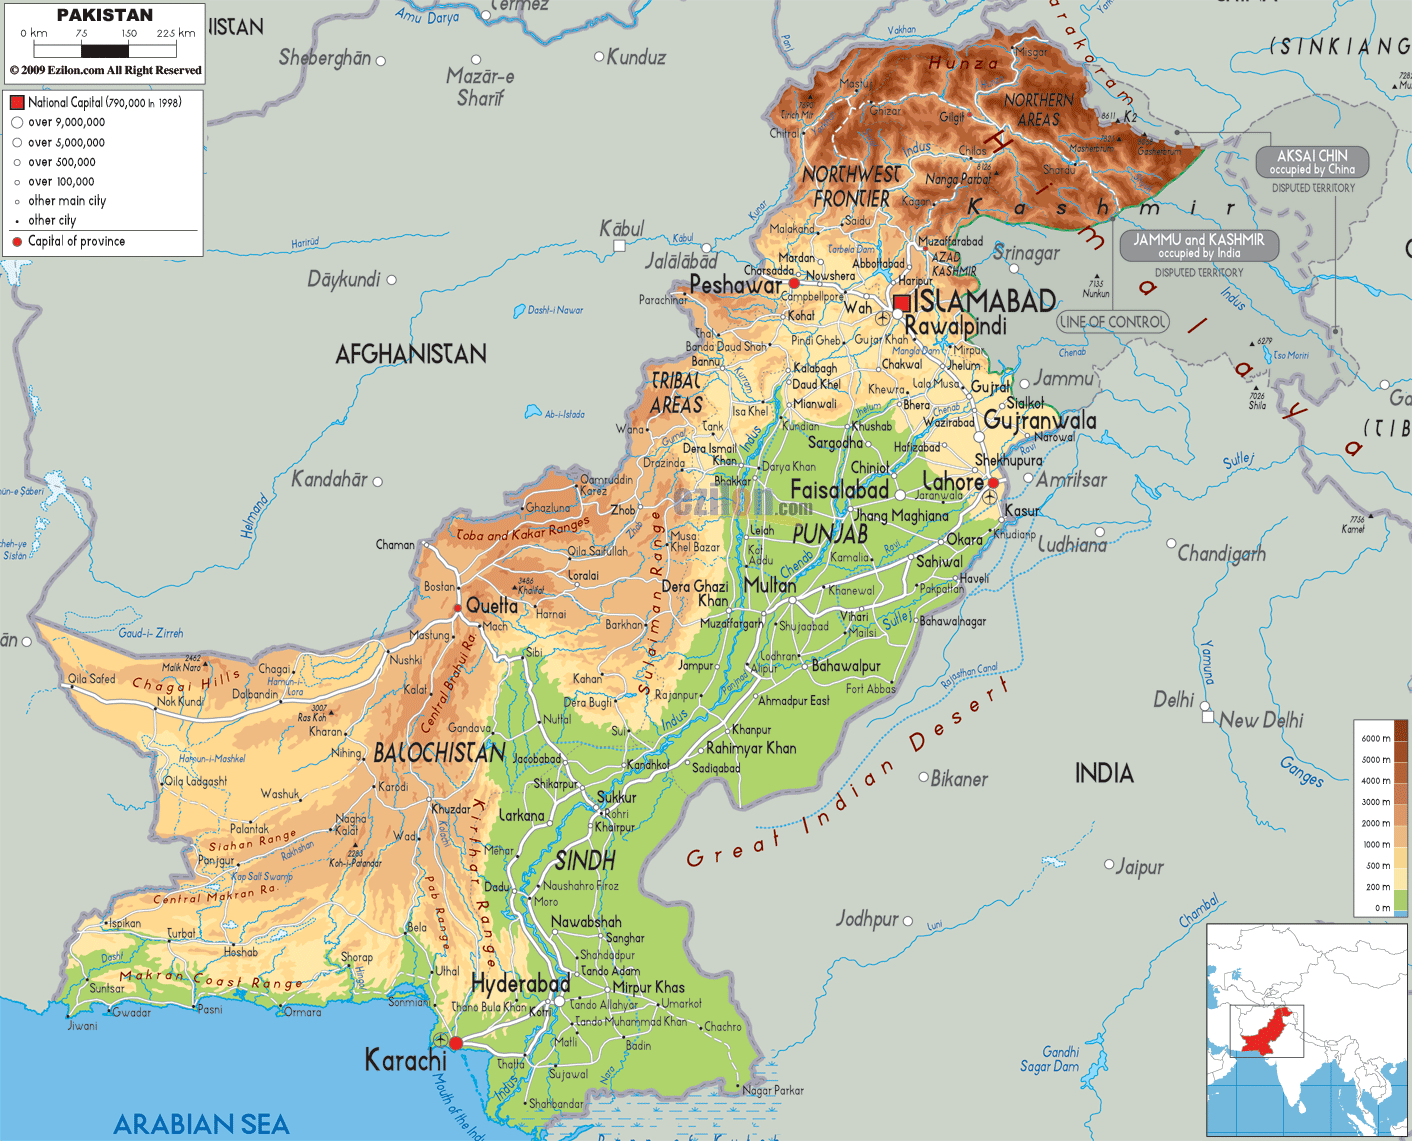 http://www.ezilon.com/maps/images/asia/Pakistan-physical-map.gif